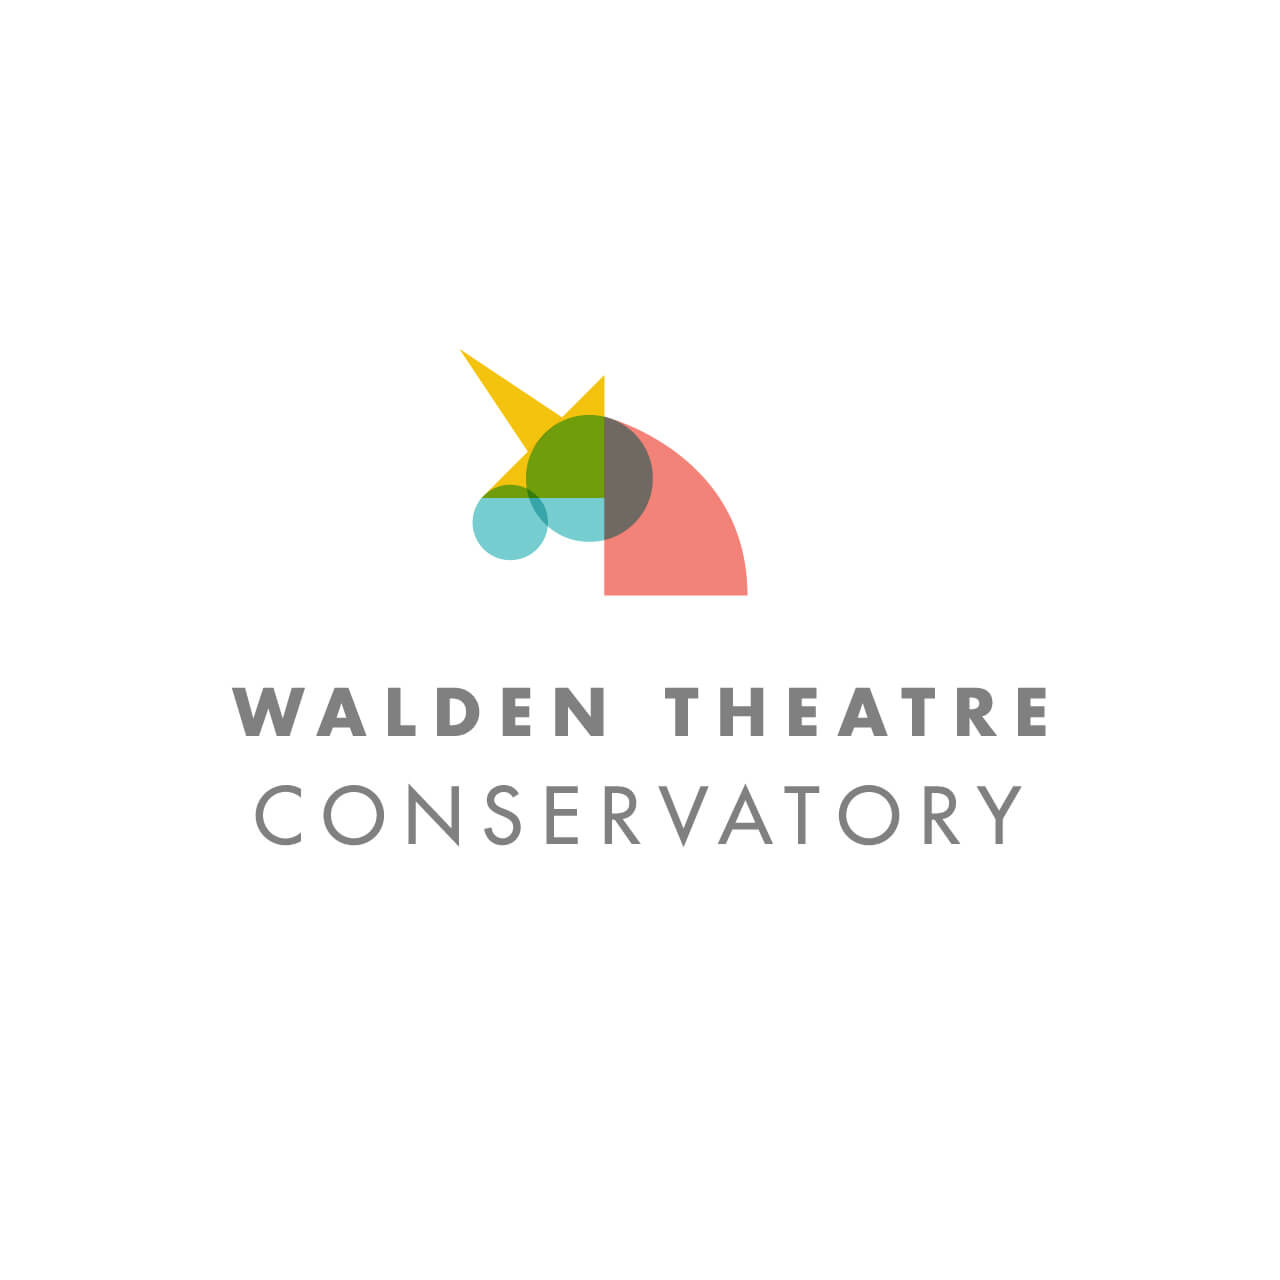 Commonwealth Theatre Center, Walden Theatre Conservatory logo